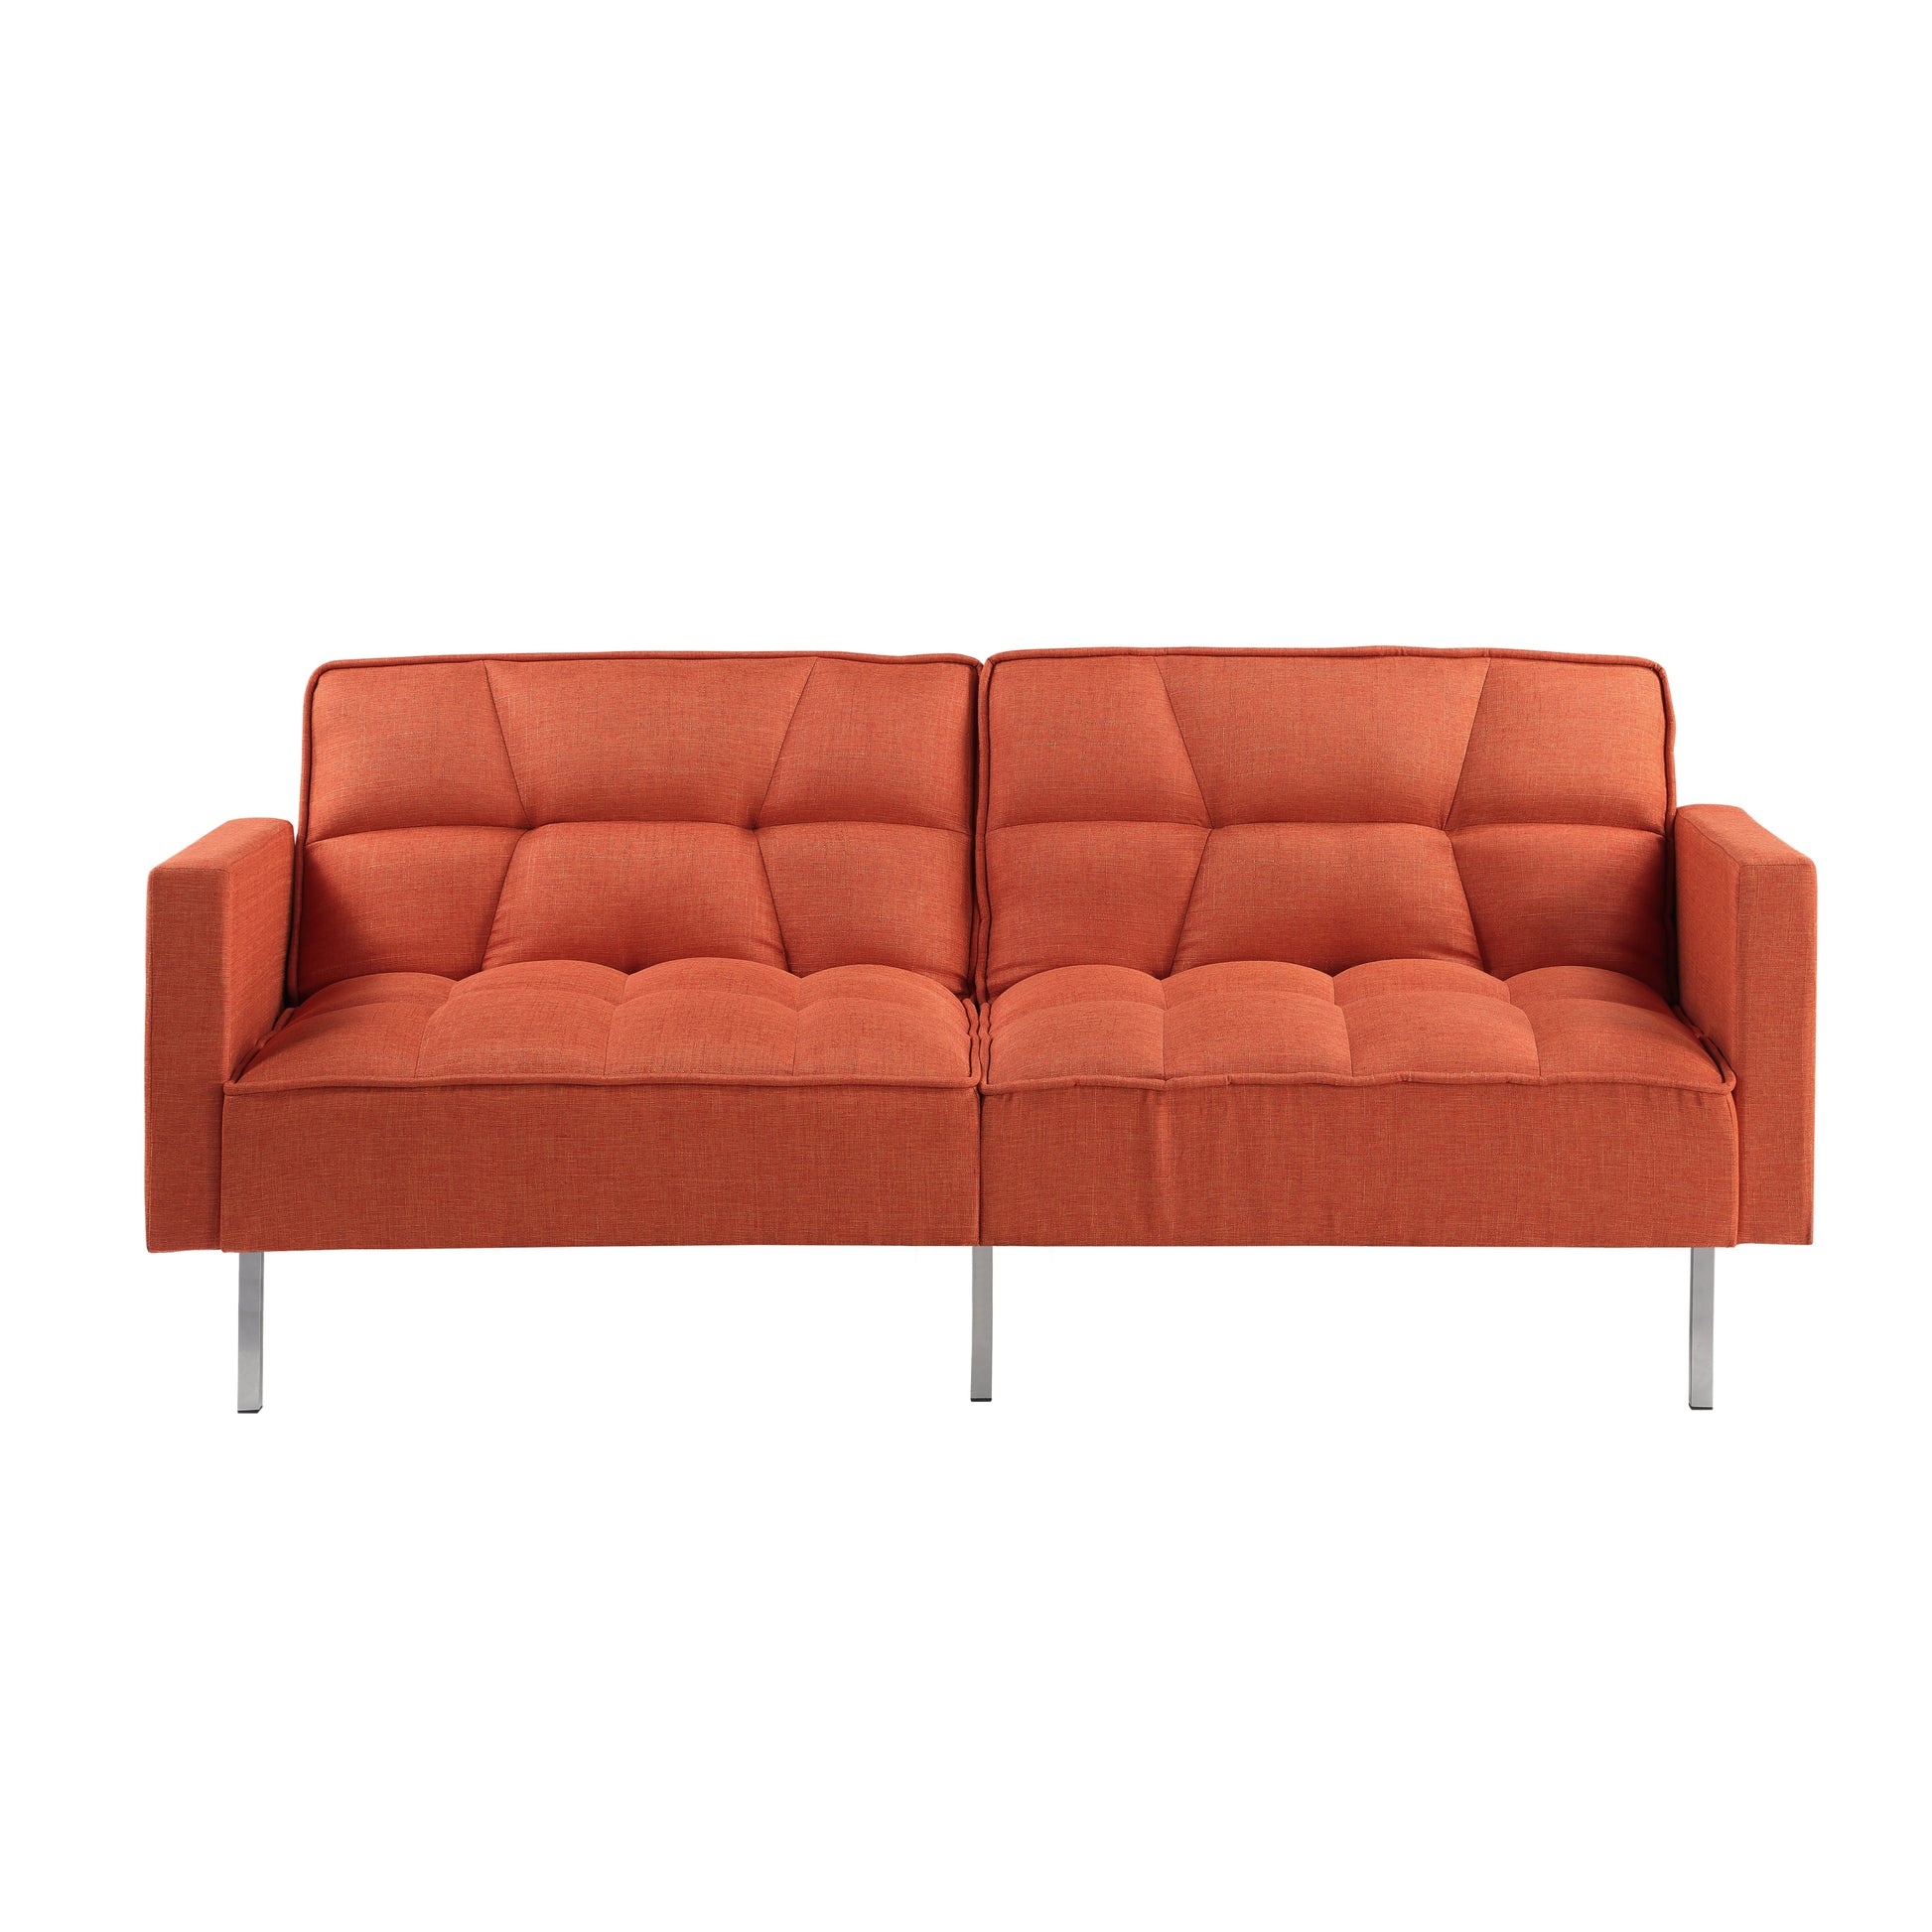 Convertible Futon Sofa for Compact Living